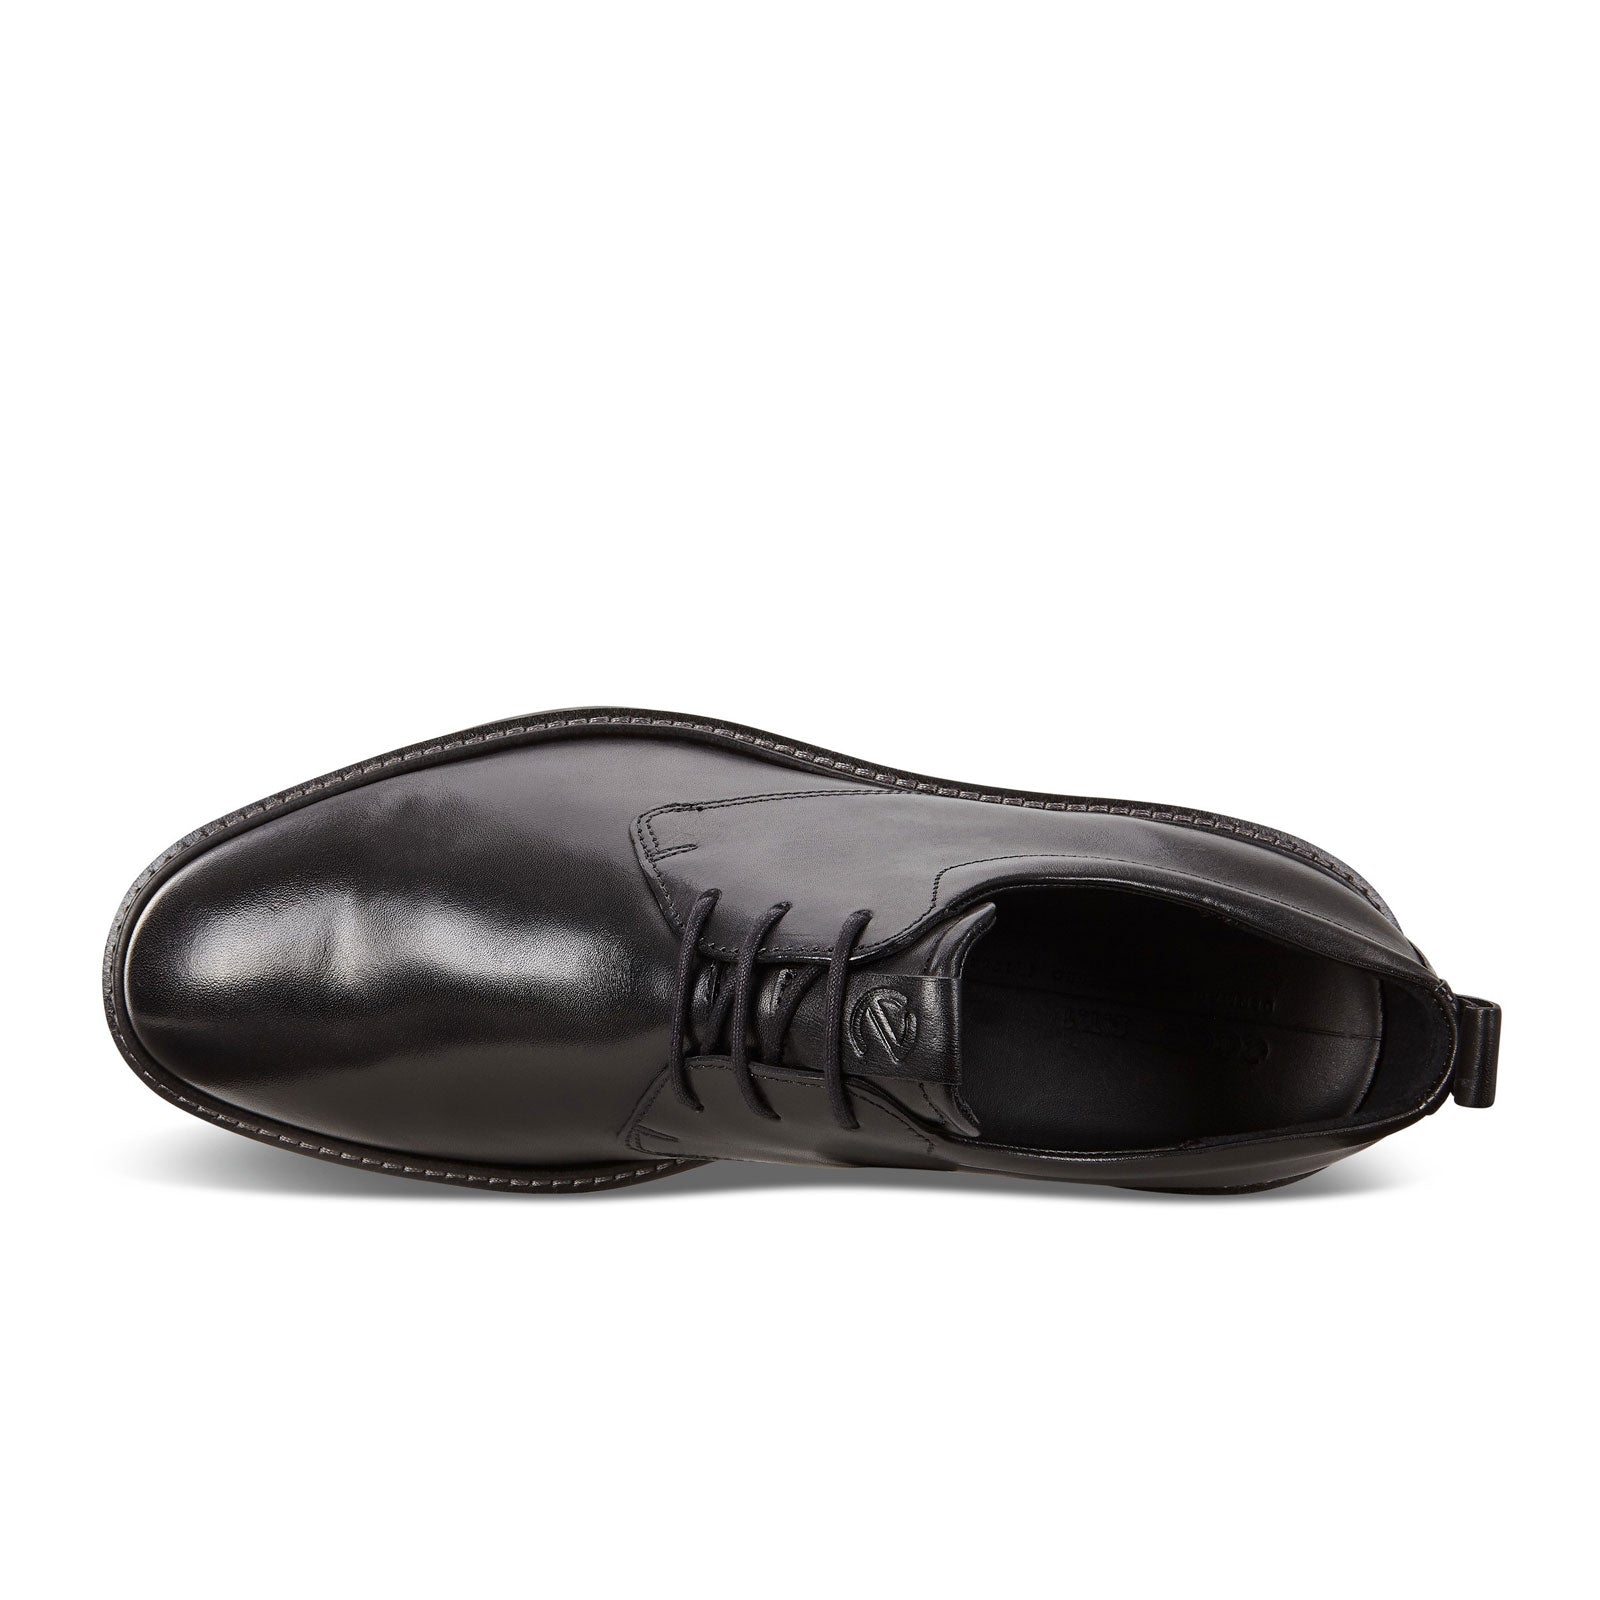 Ecco St.1 Hybrid Plain Toe Oxford (Men) - Black Dress-Casual - Oxfords - The Heel Shoe Fitters